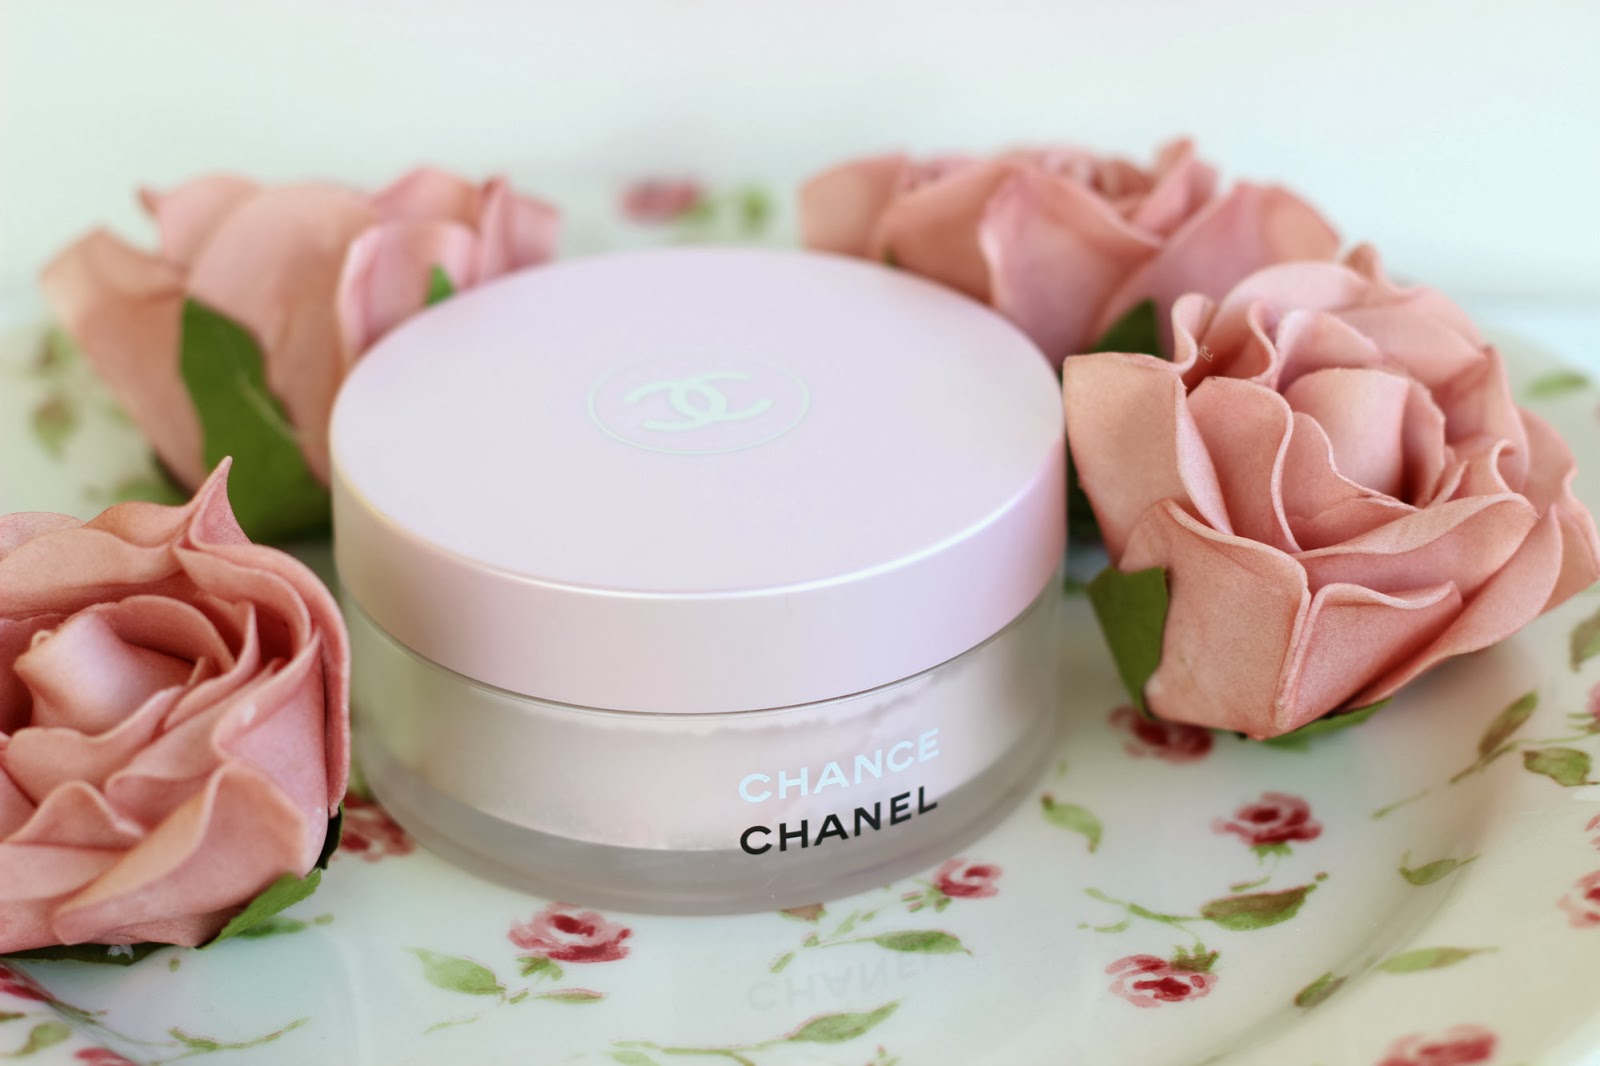 Chanel Chance Eau Tendre - Shimmering Powdered Perfume